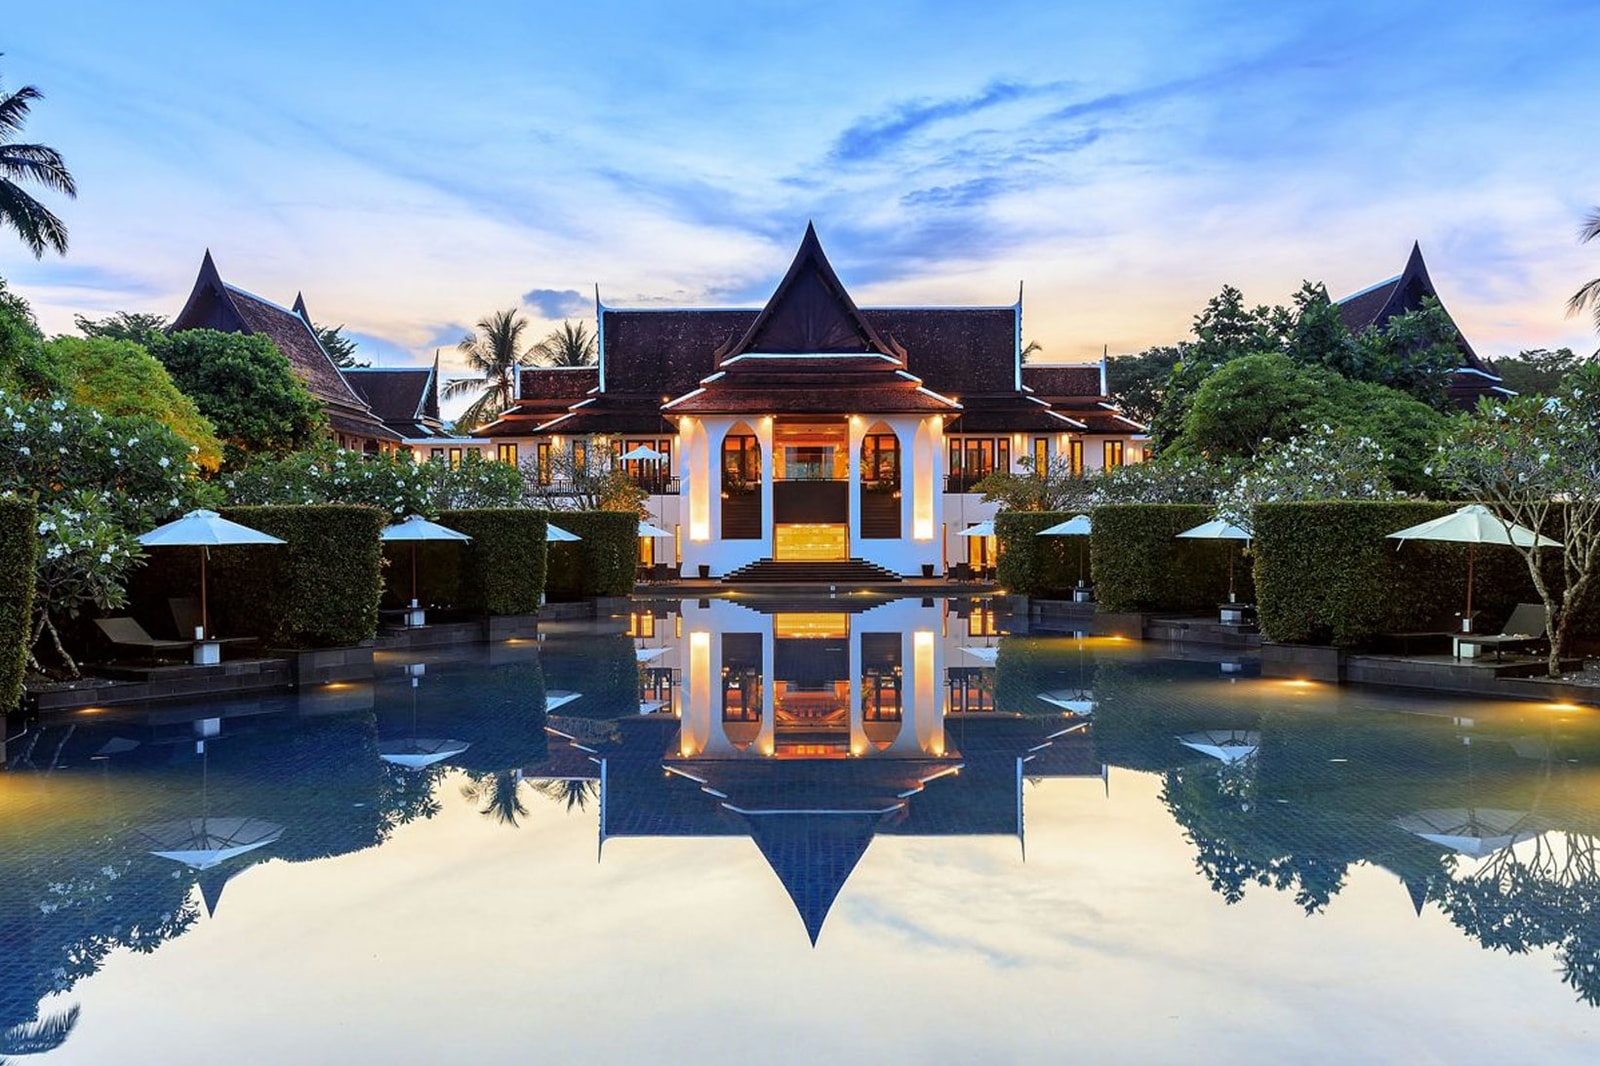 Thailand Best Hotels Resorts Vacations Phuket Bangkok Koh Samui Centara Amanpuri Ritz Carlton